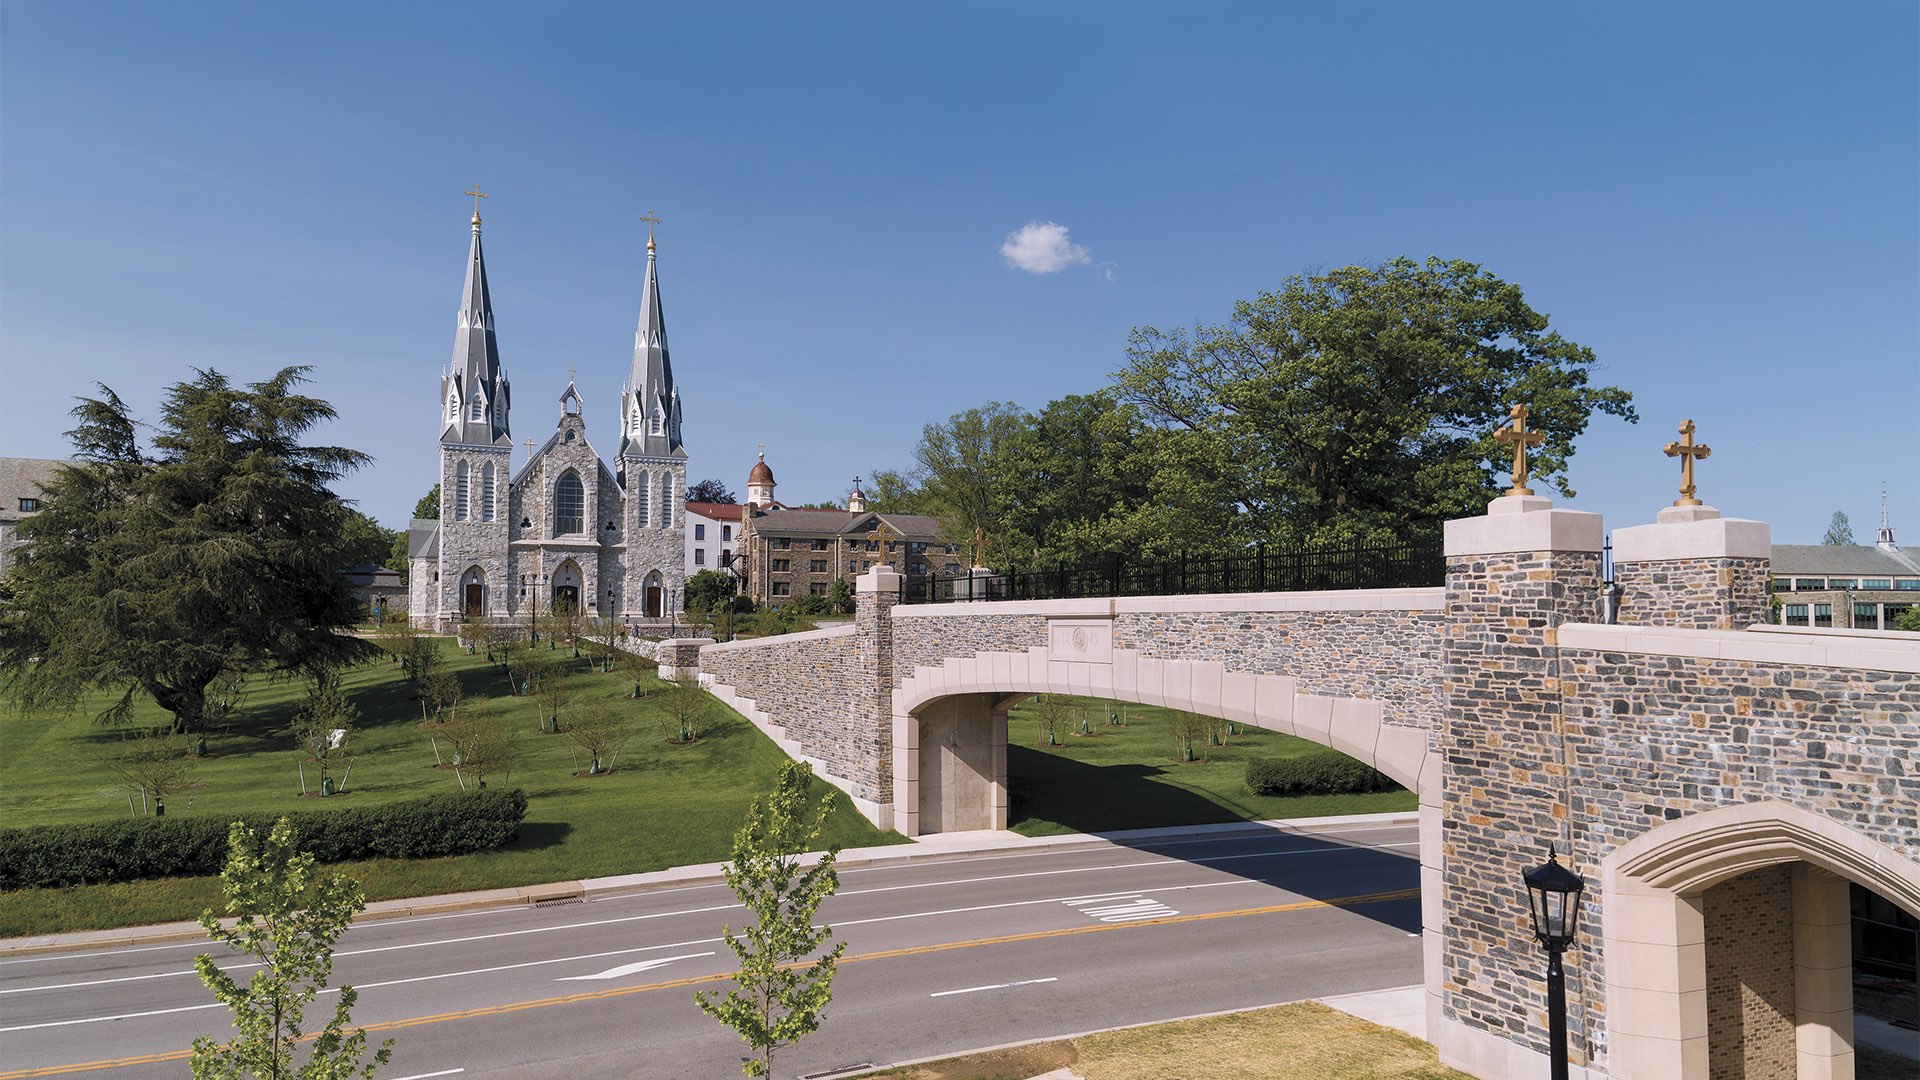 The St. Thomas of Villanova Church with the newly built pedestrian bridge over Lancaster Avenue.